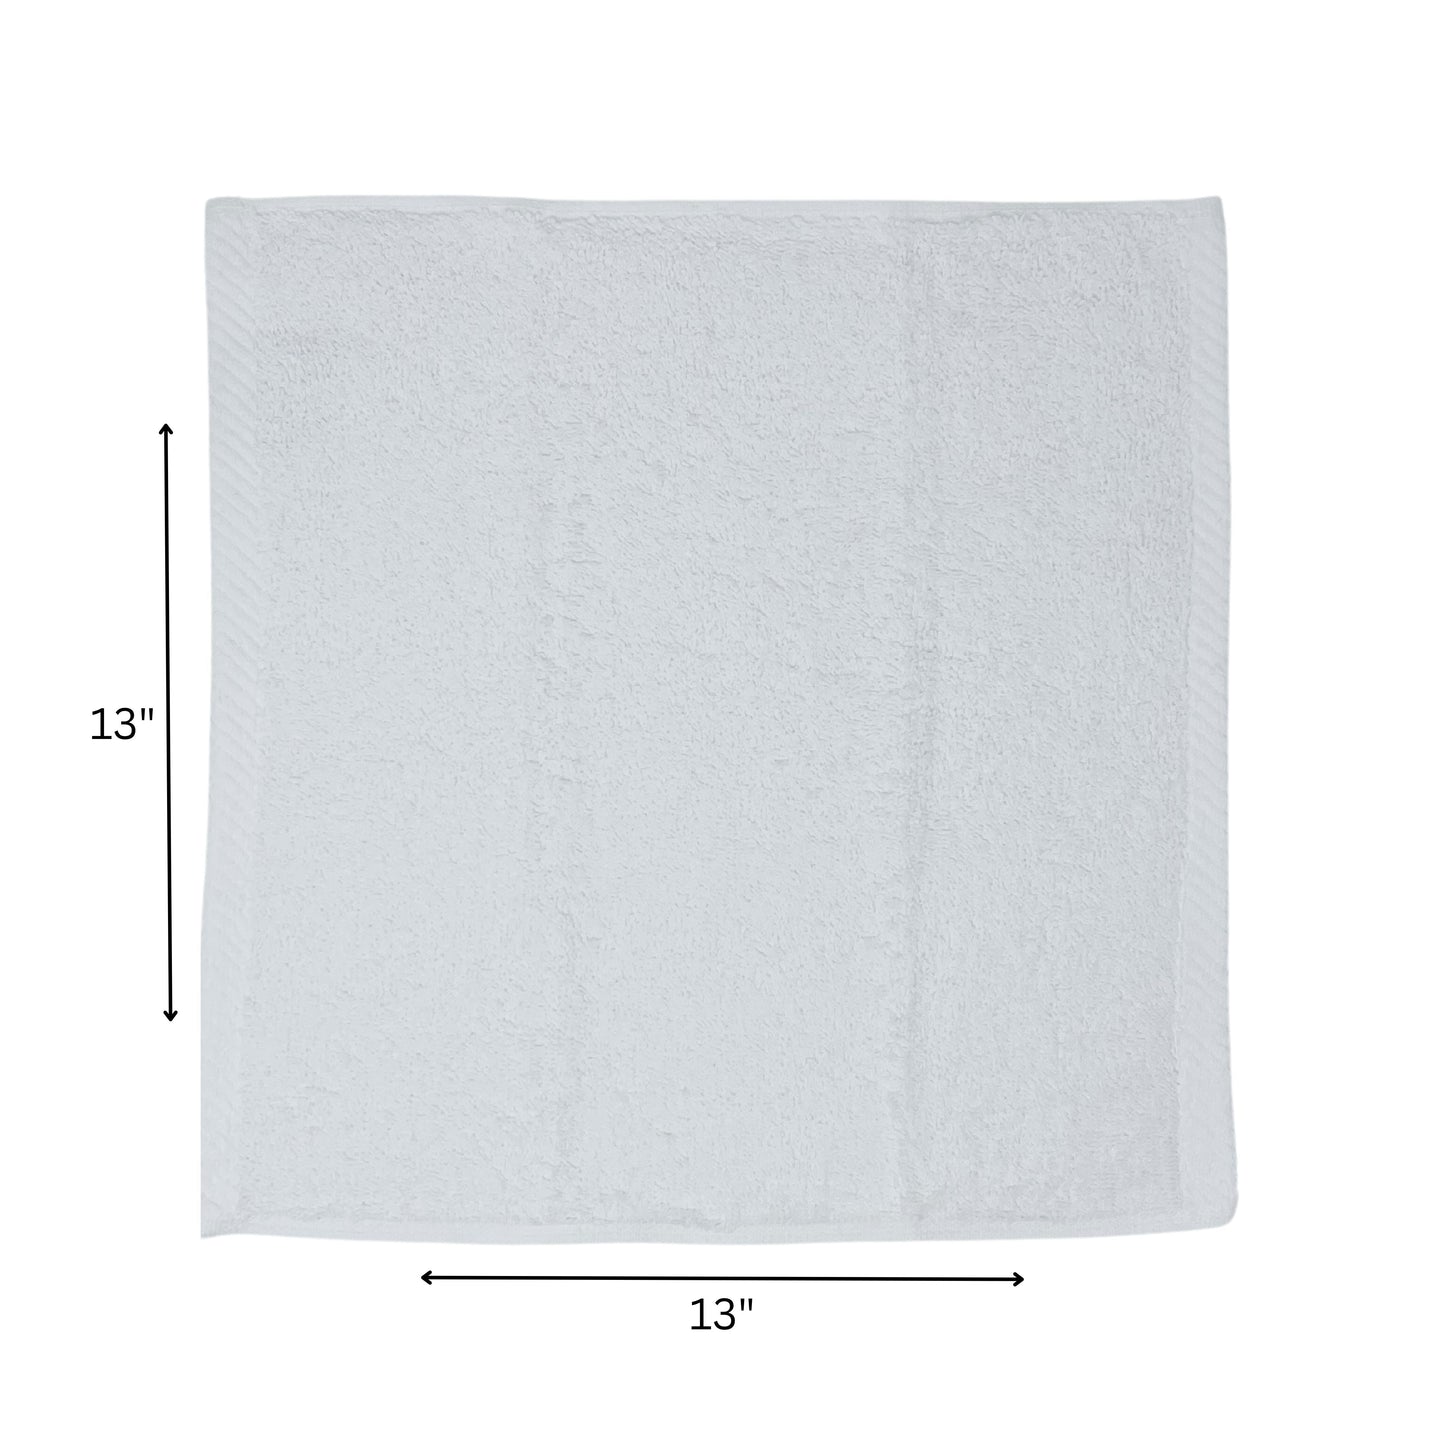 Sobel Westex 13" x 13" White Hand Towel Pack of 12